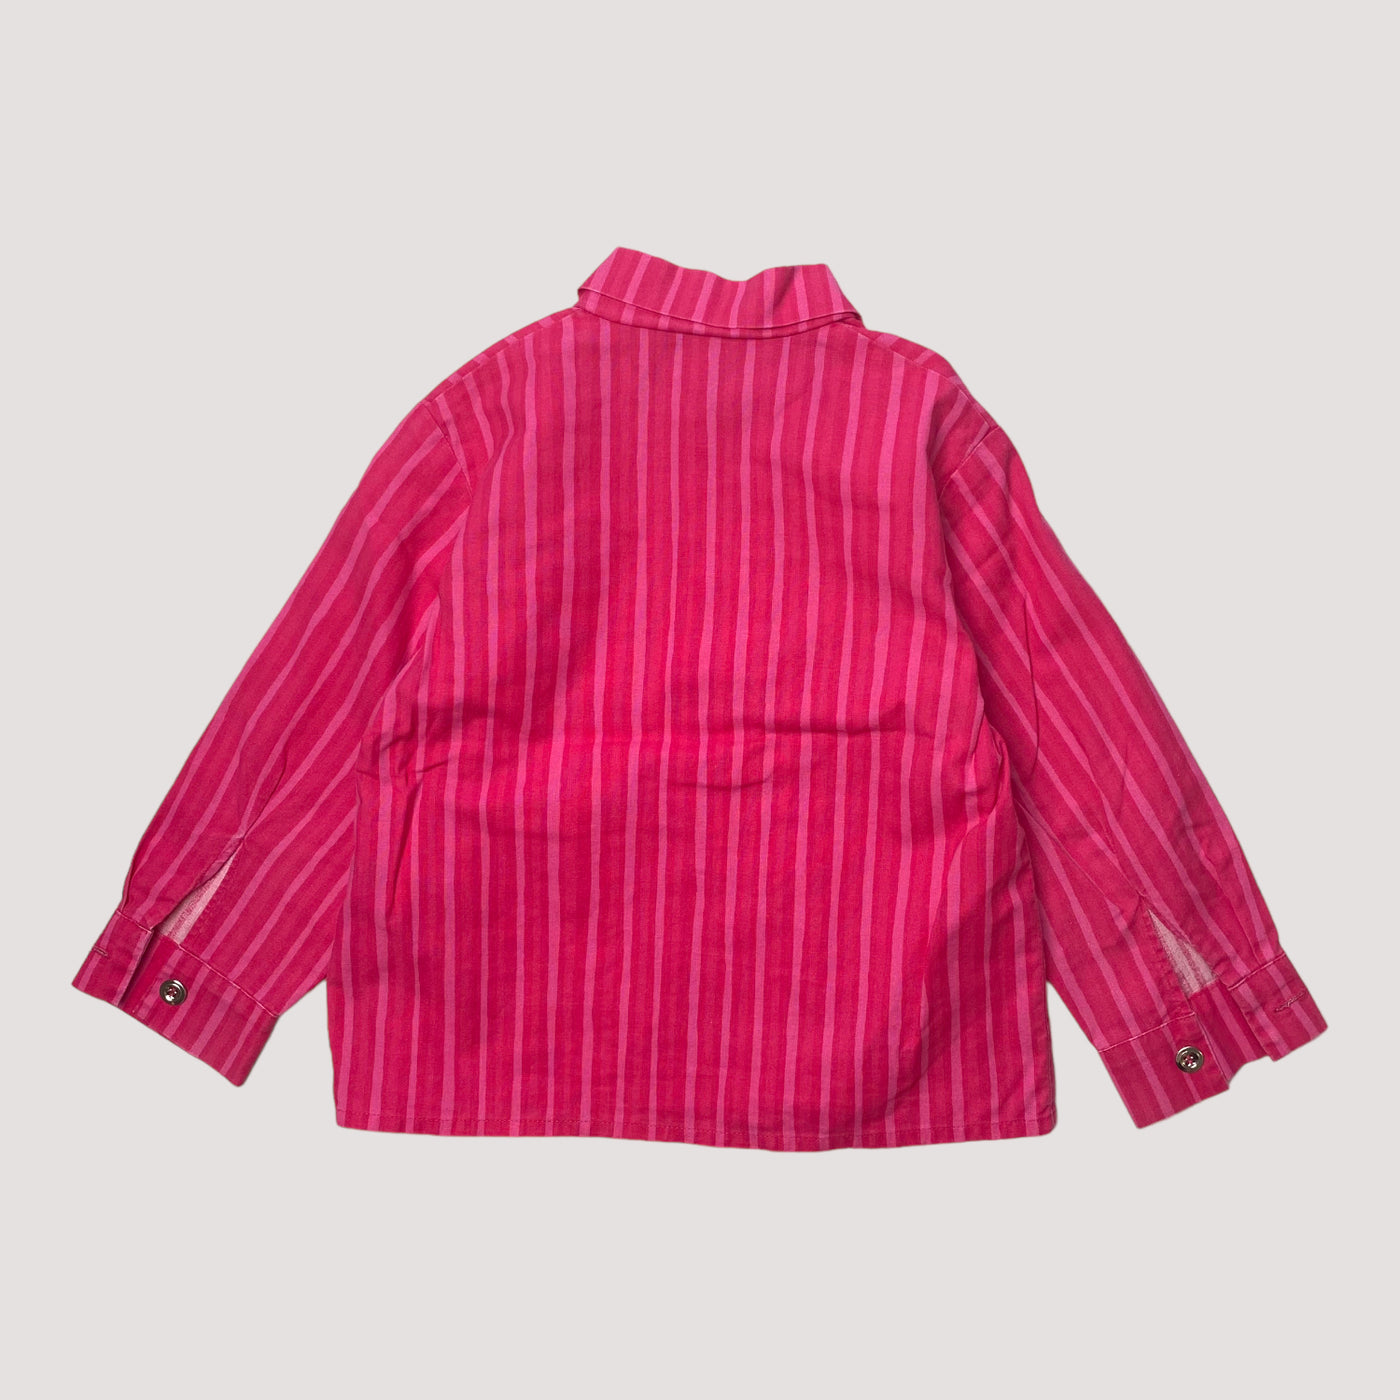 Marimekko jokapoika shirt, pink stripes | 90cm